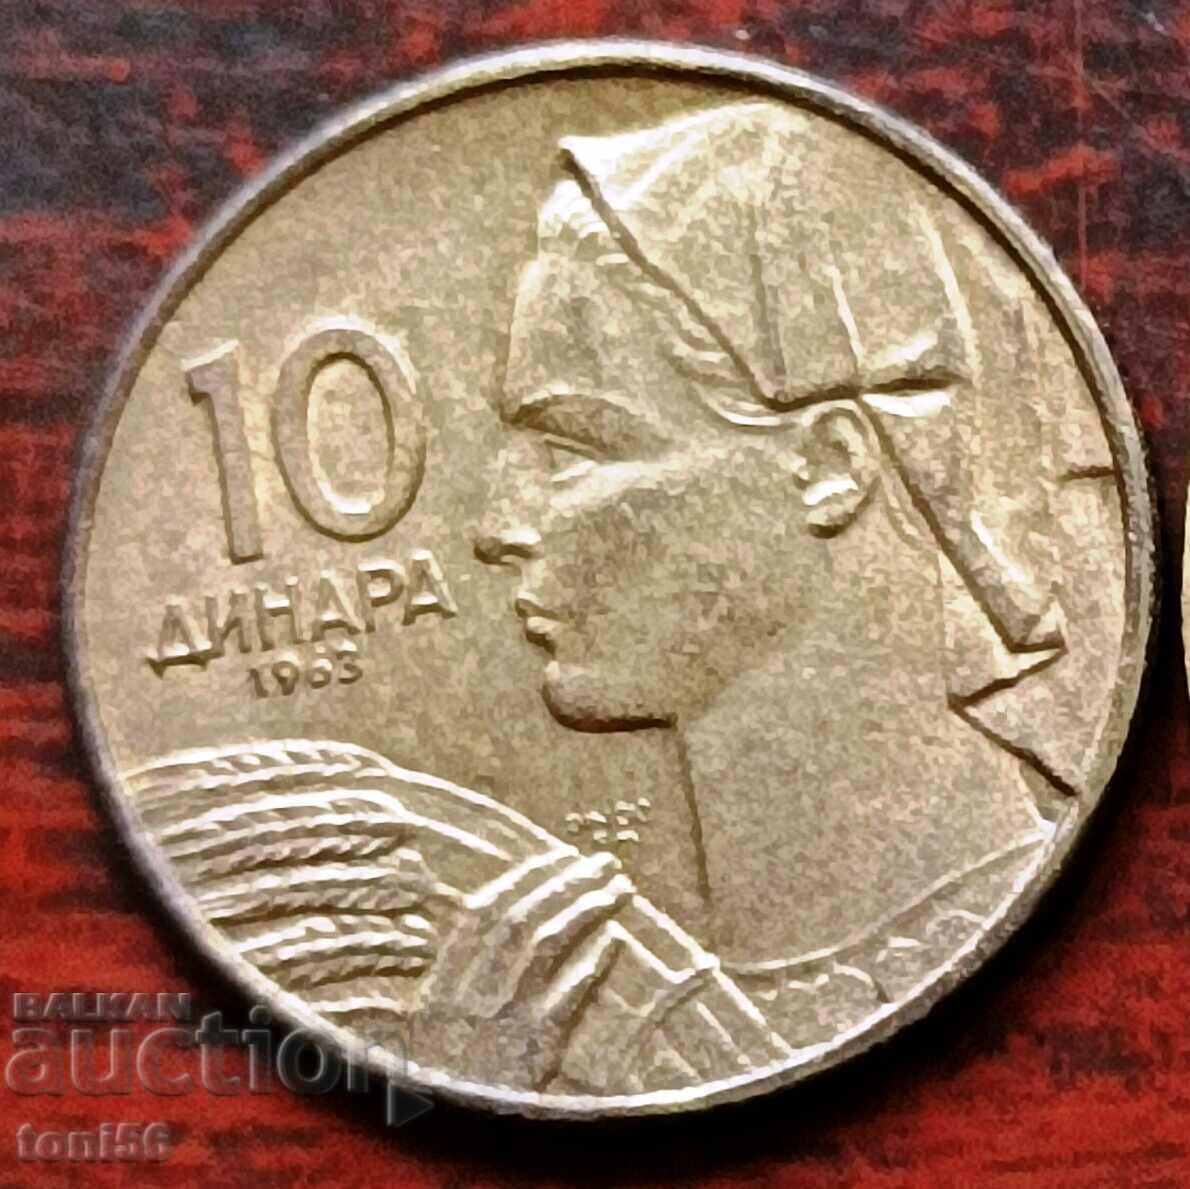 Yugoslavia 10 dinars 1963 quality